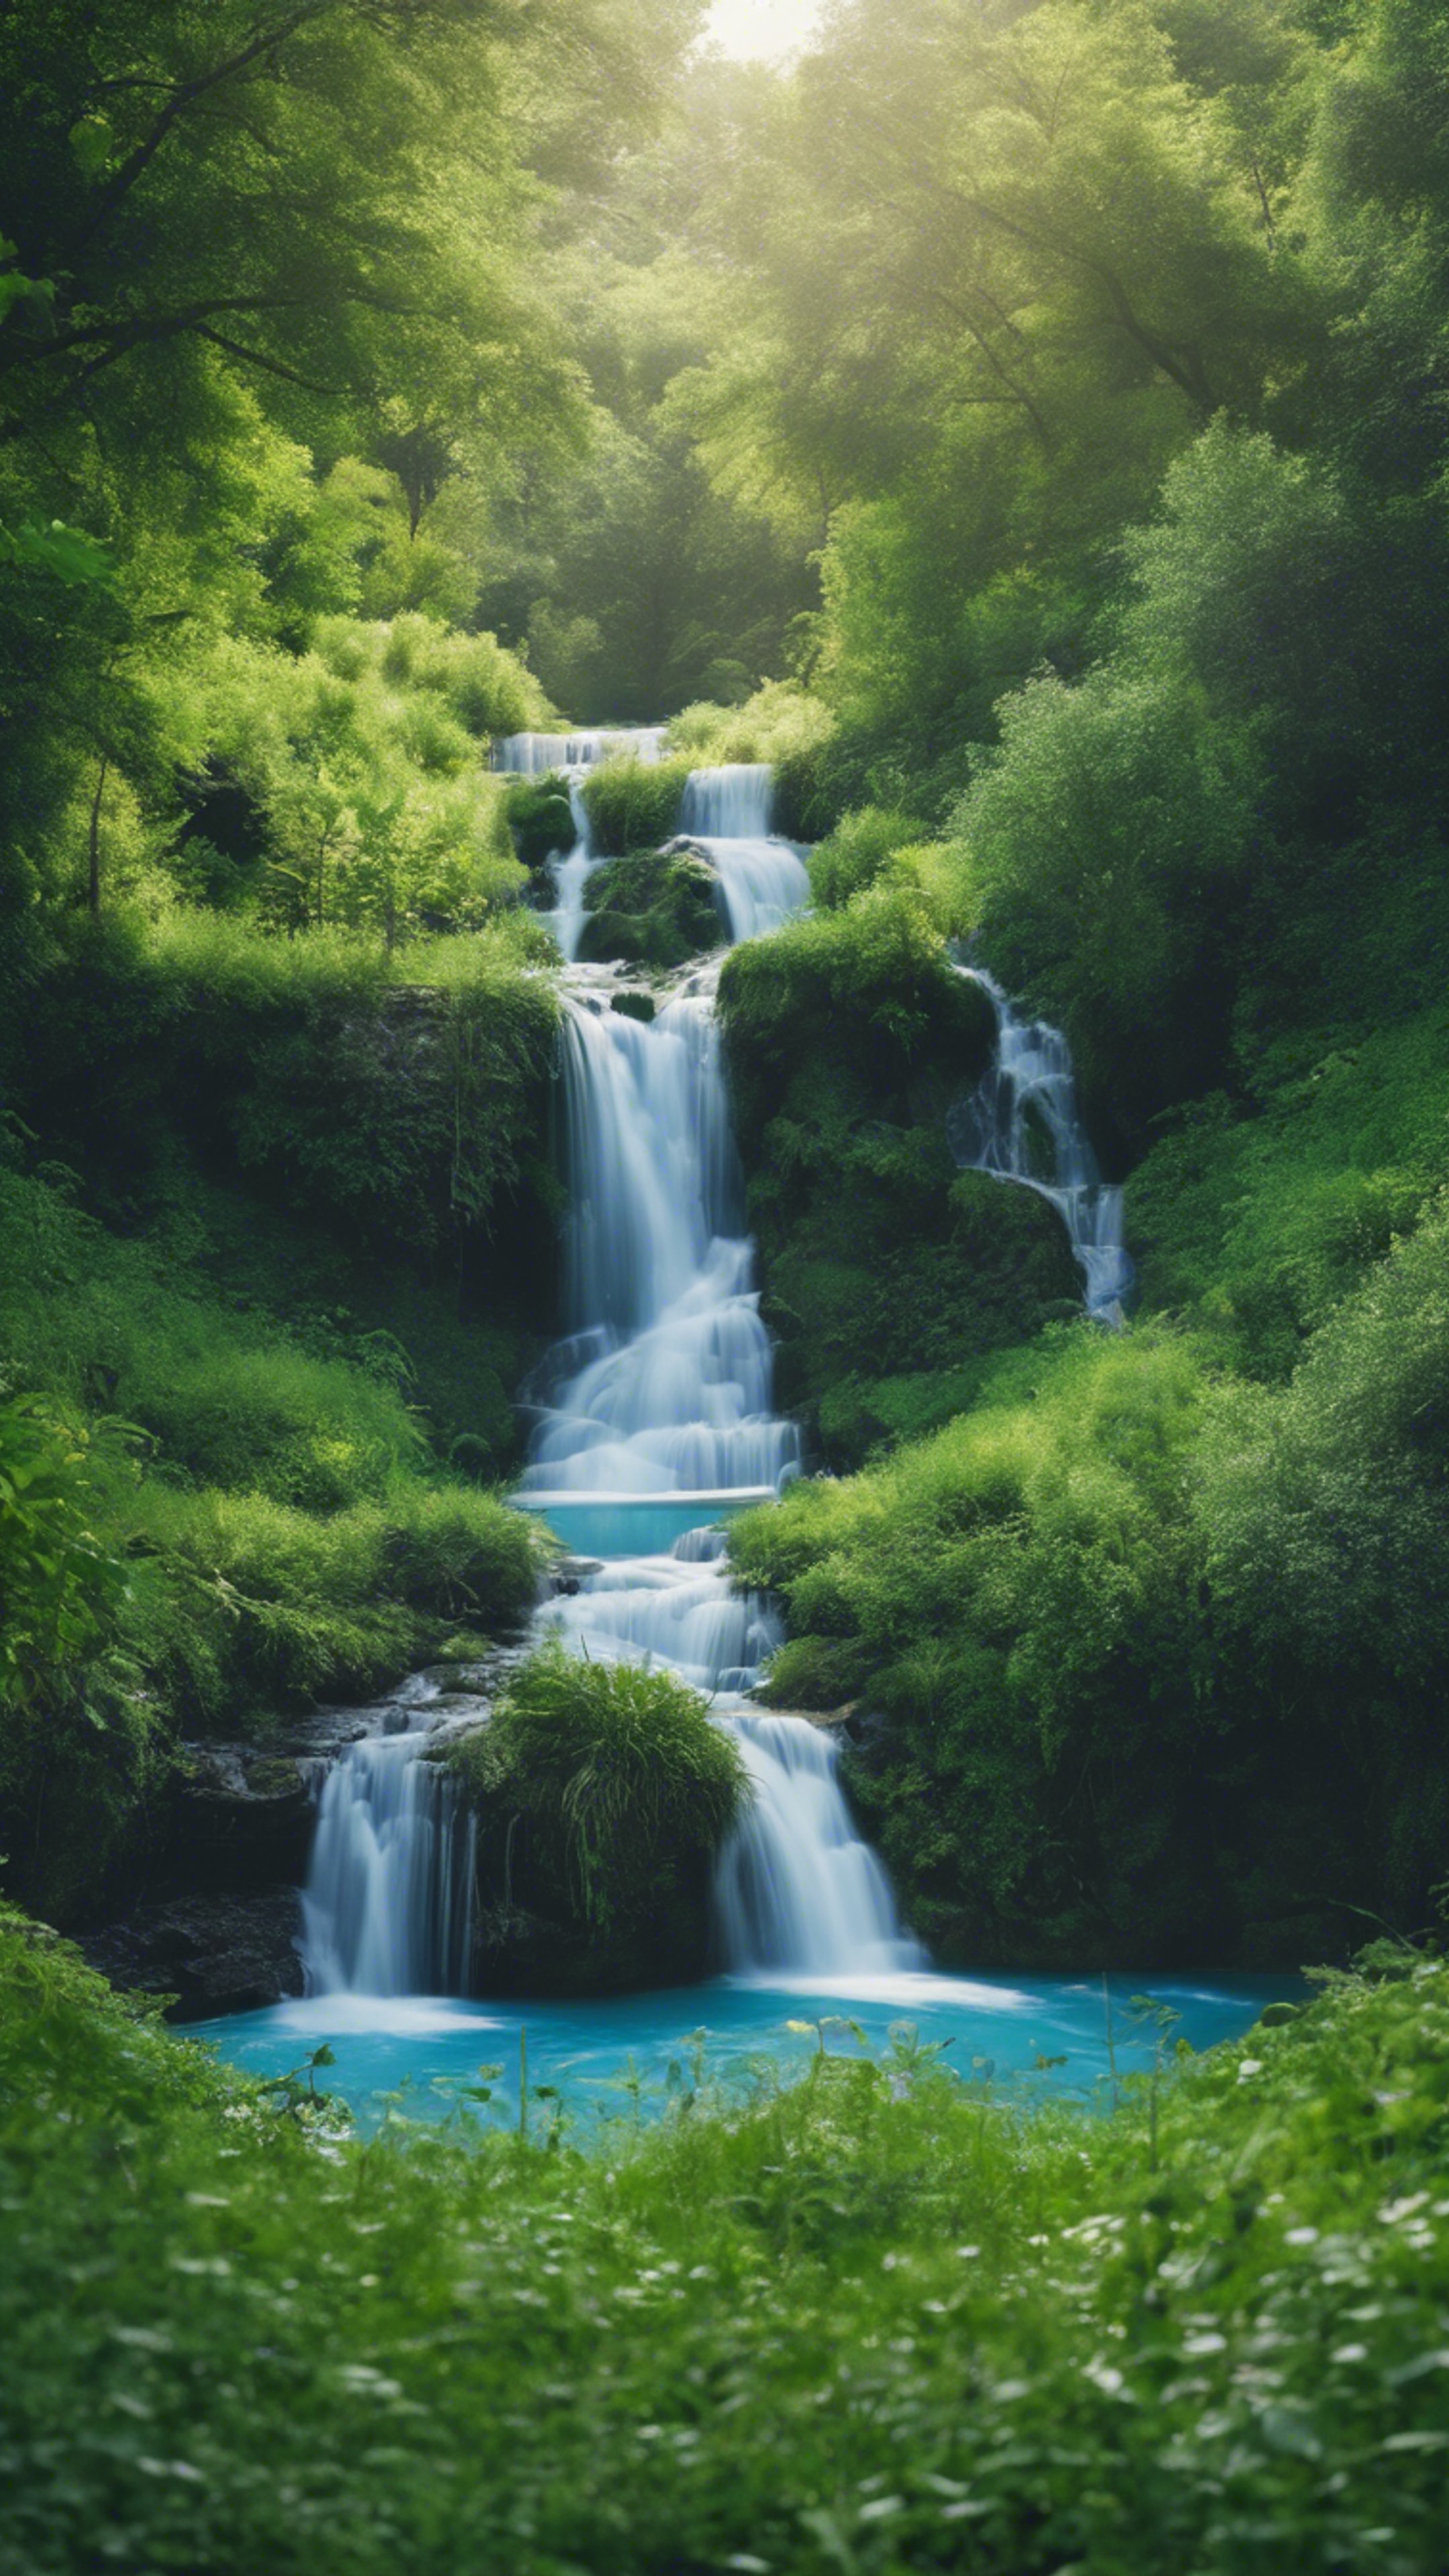 A cool blue waterfall cascading into a lush green meadow. ផ្ទាំង​រូបភាព[661f80b9c31c460db5eb]